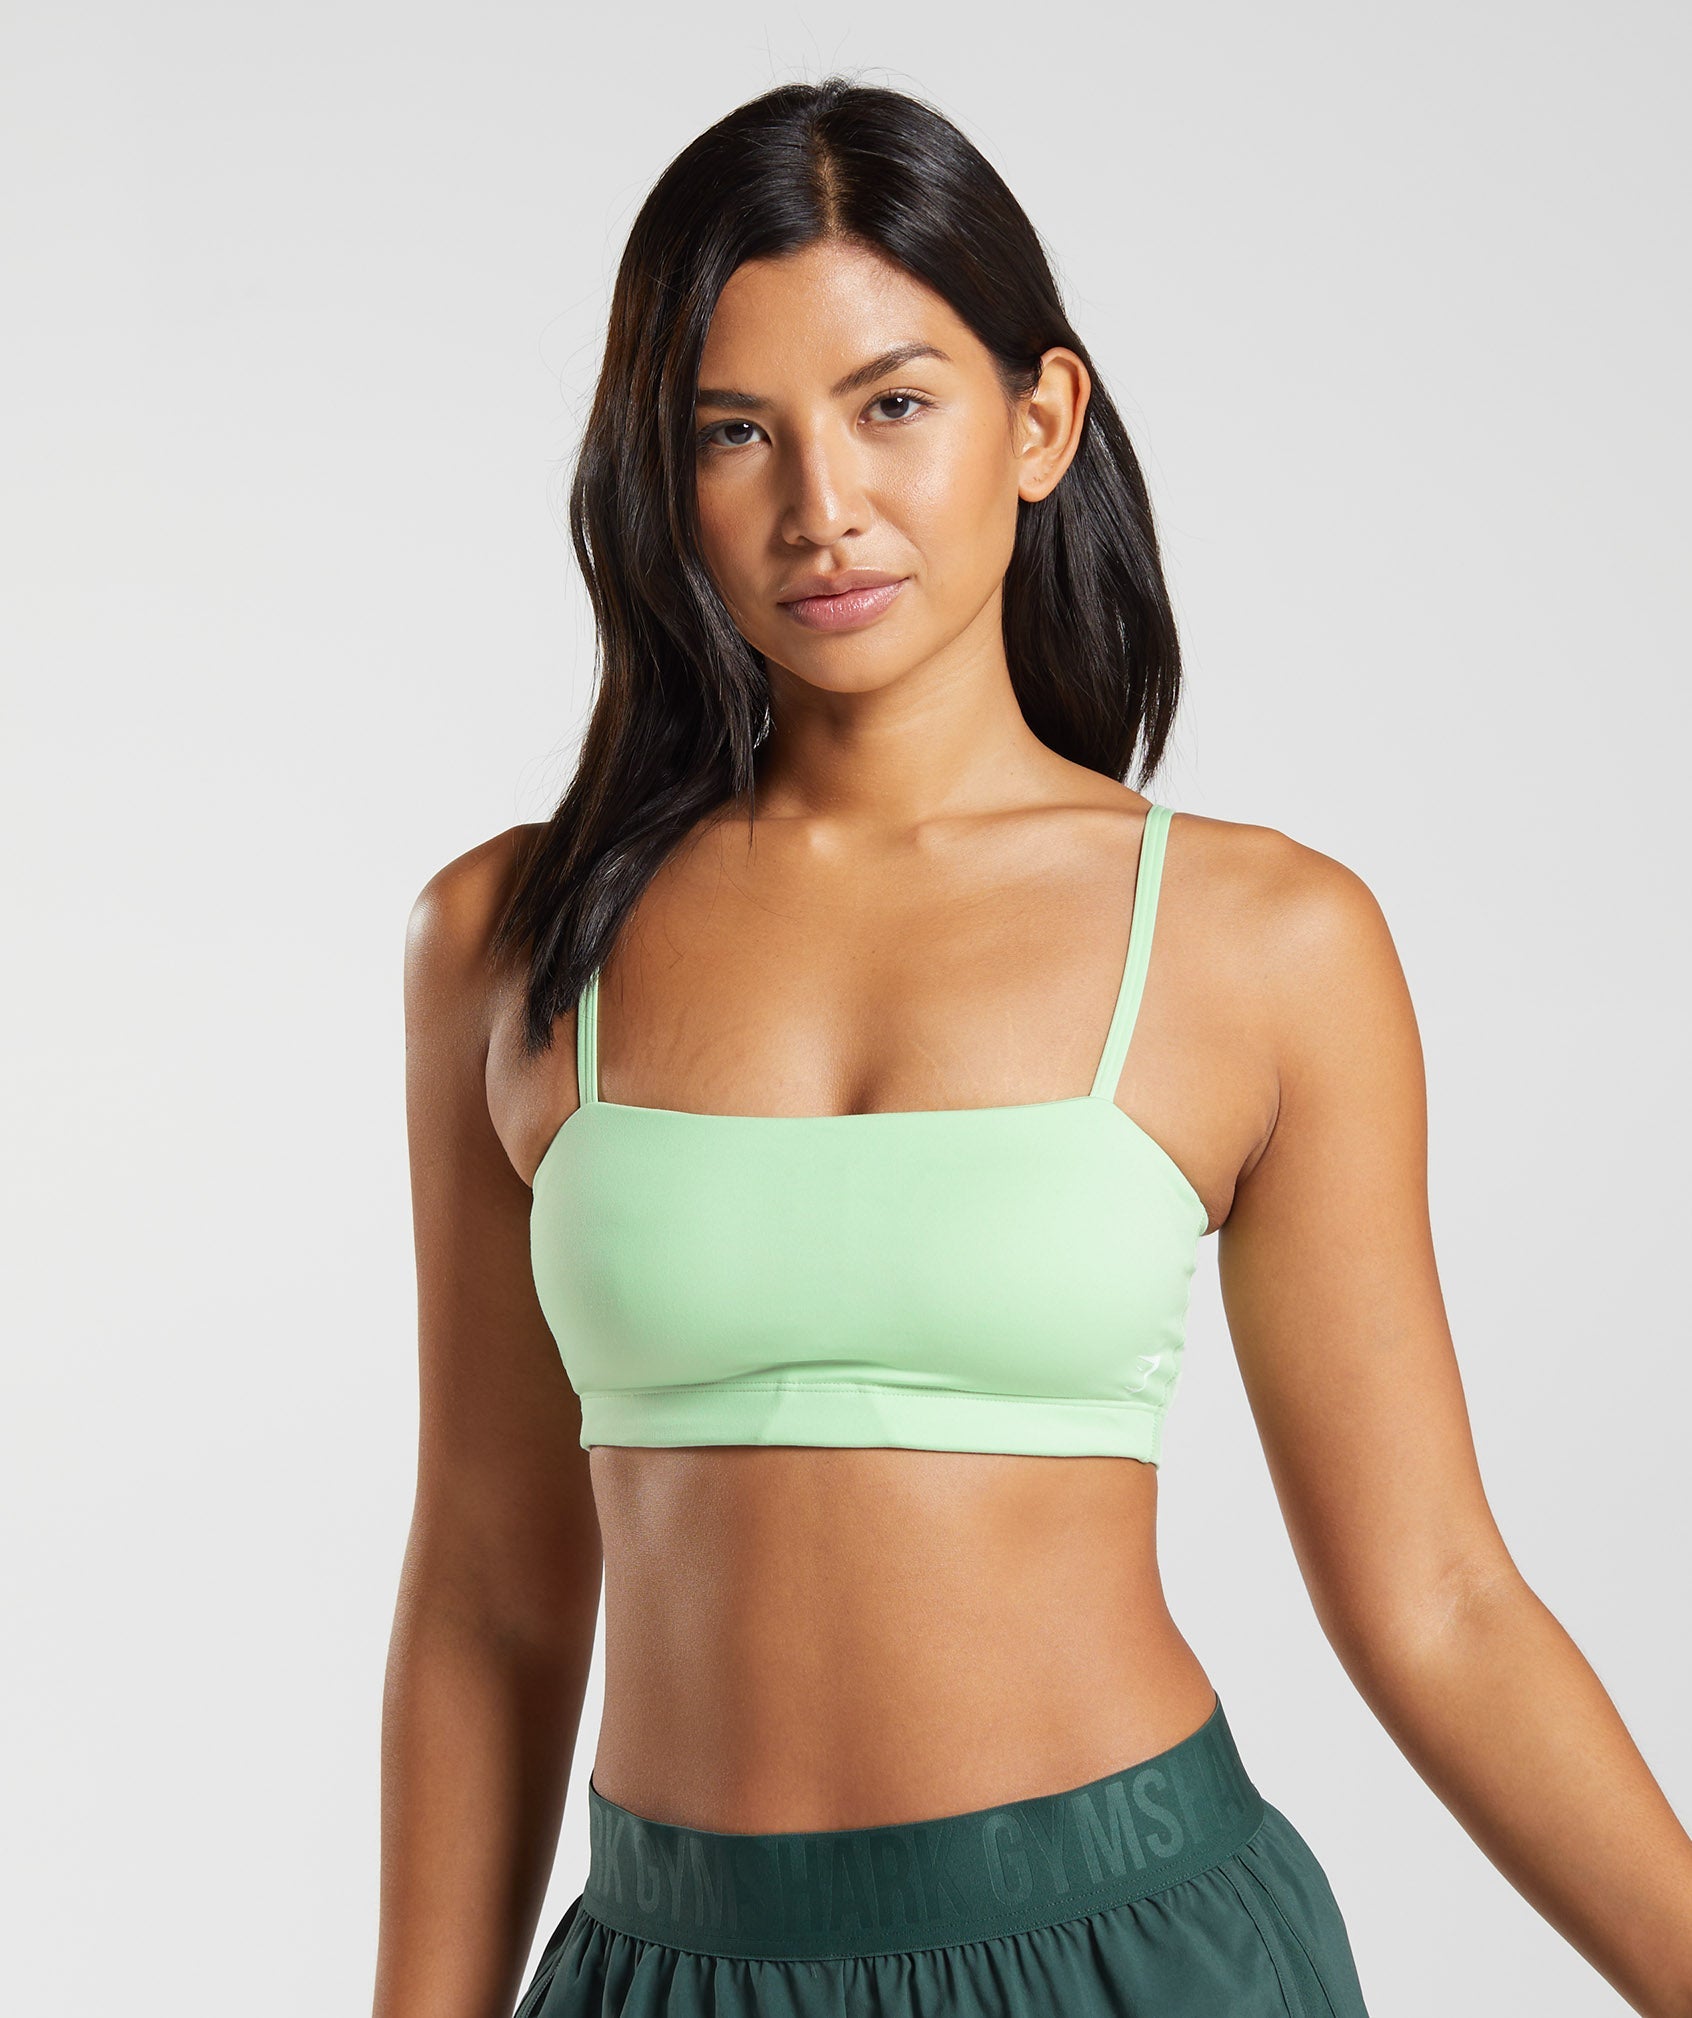 Women's Sports Bra - Breathable Nylon Gymshark Bandeau Top For Fitness &  Yoga